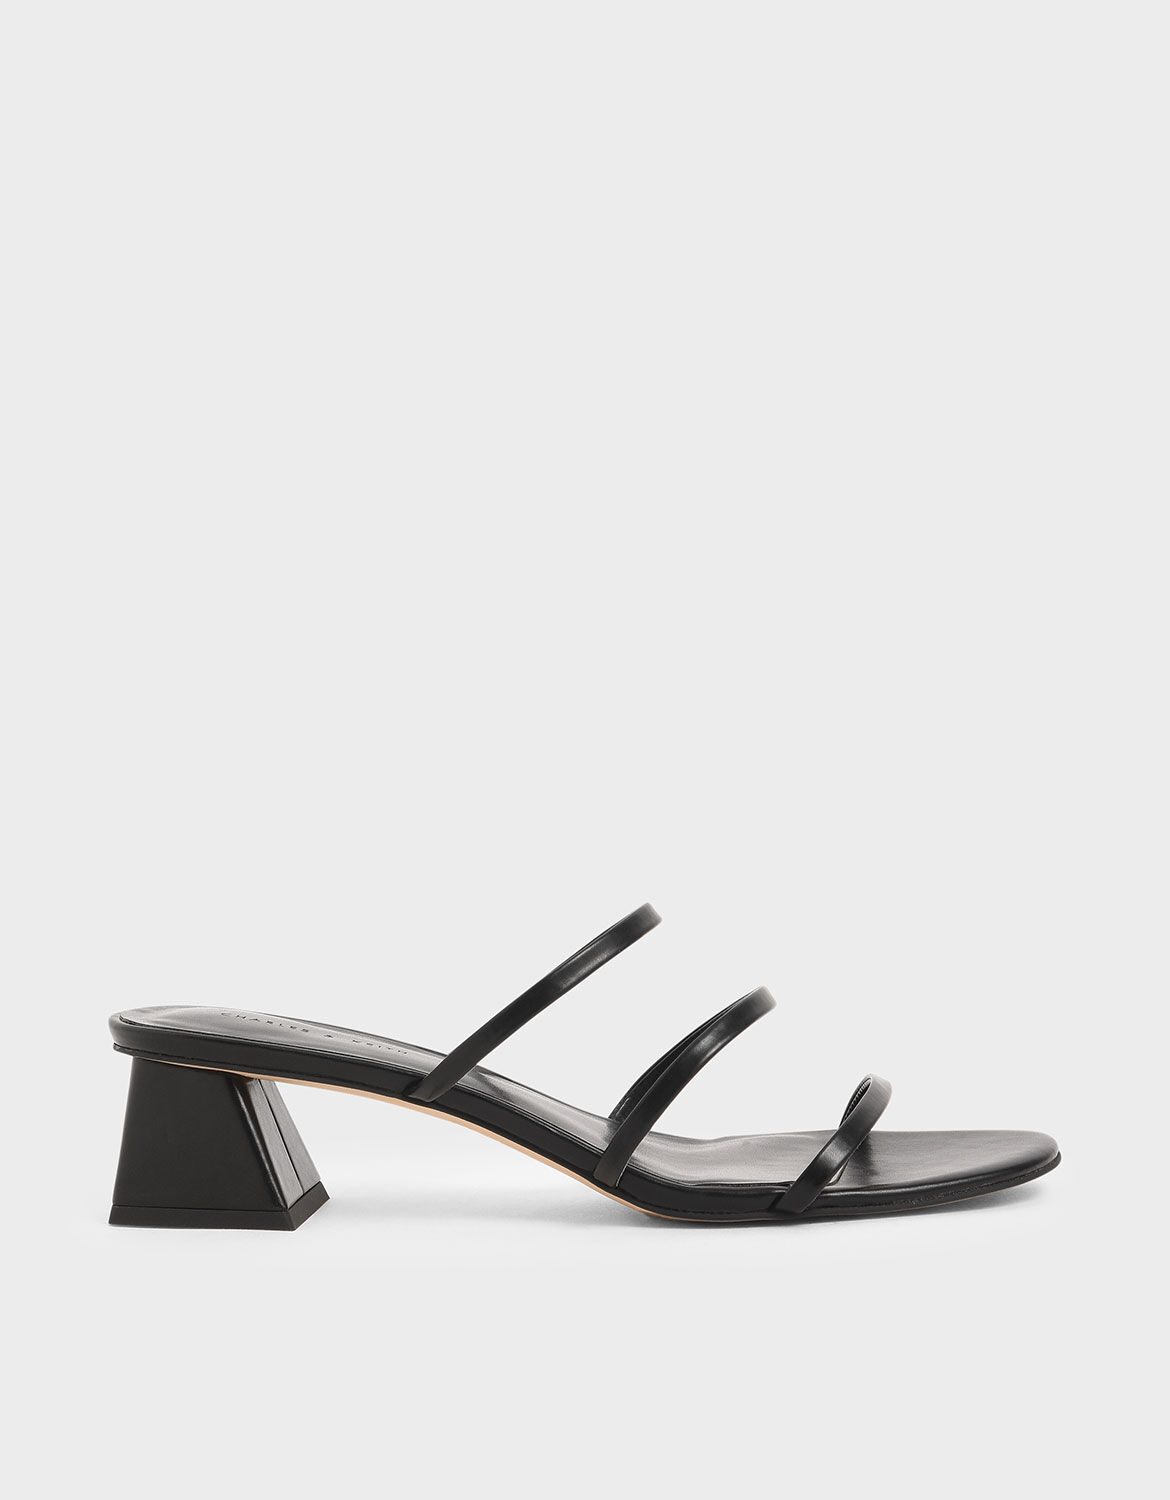 triple strap black heels